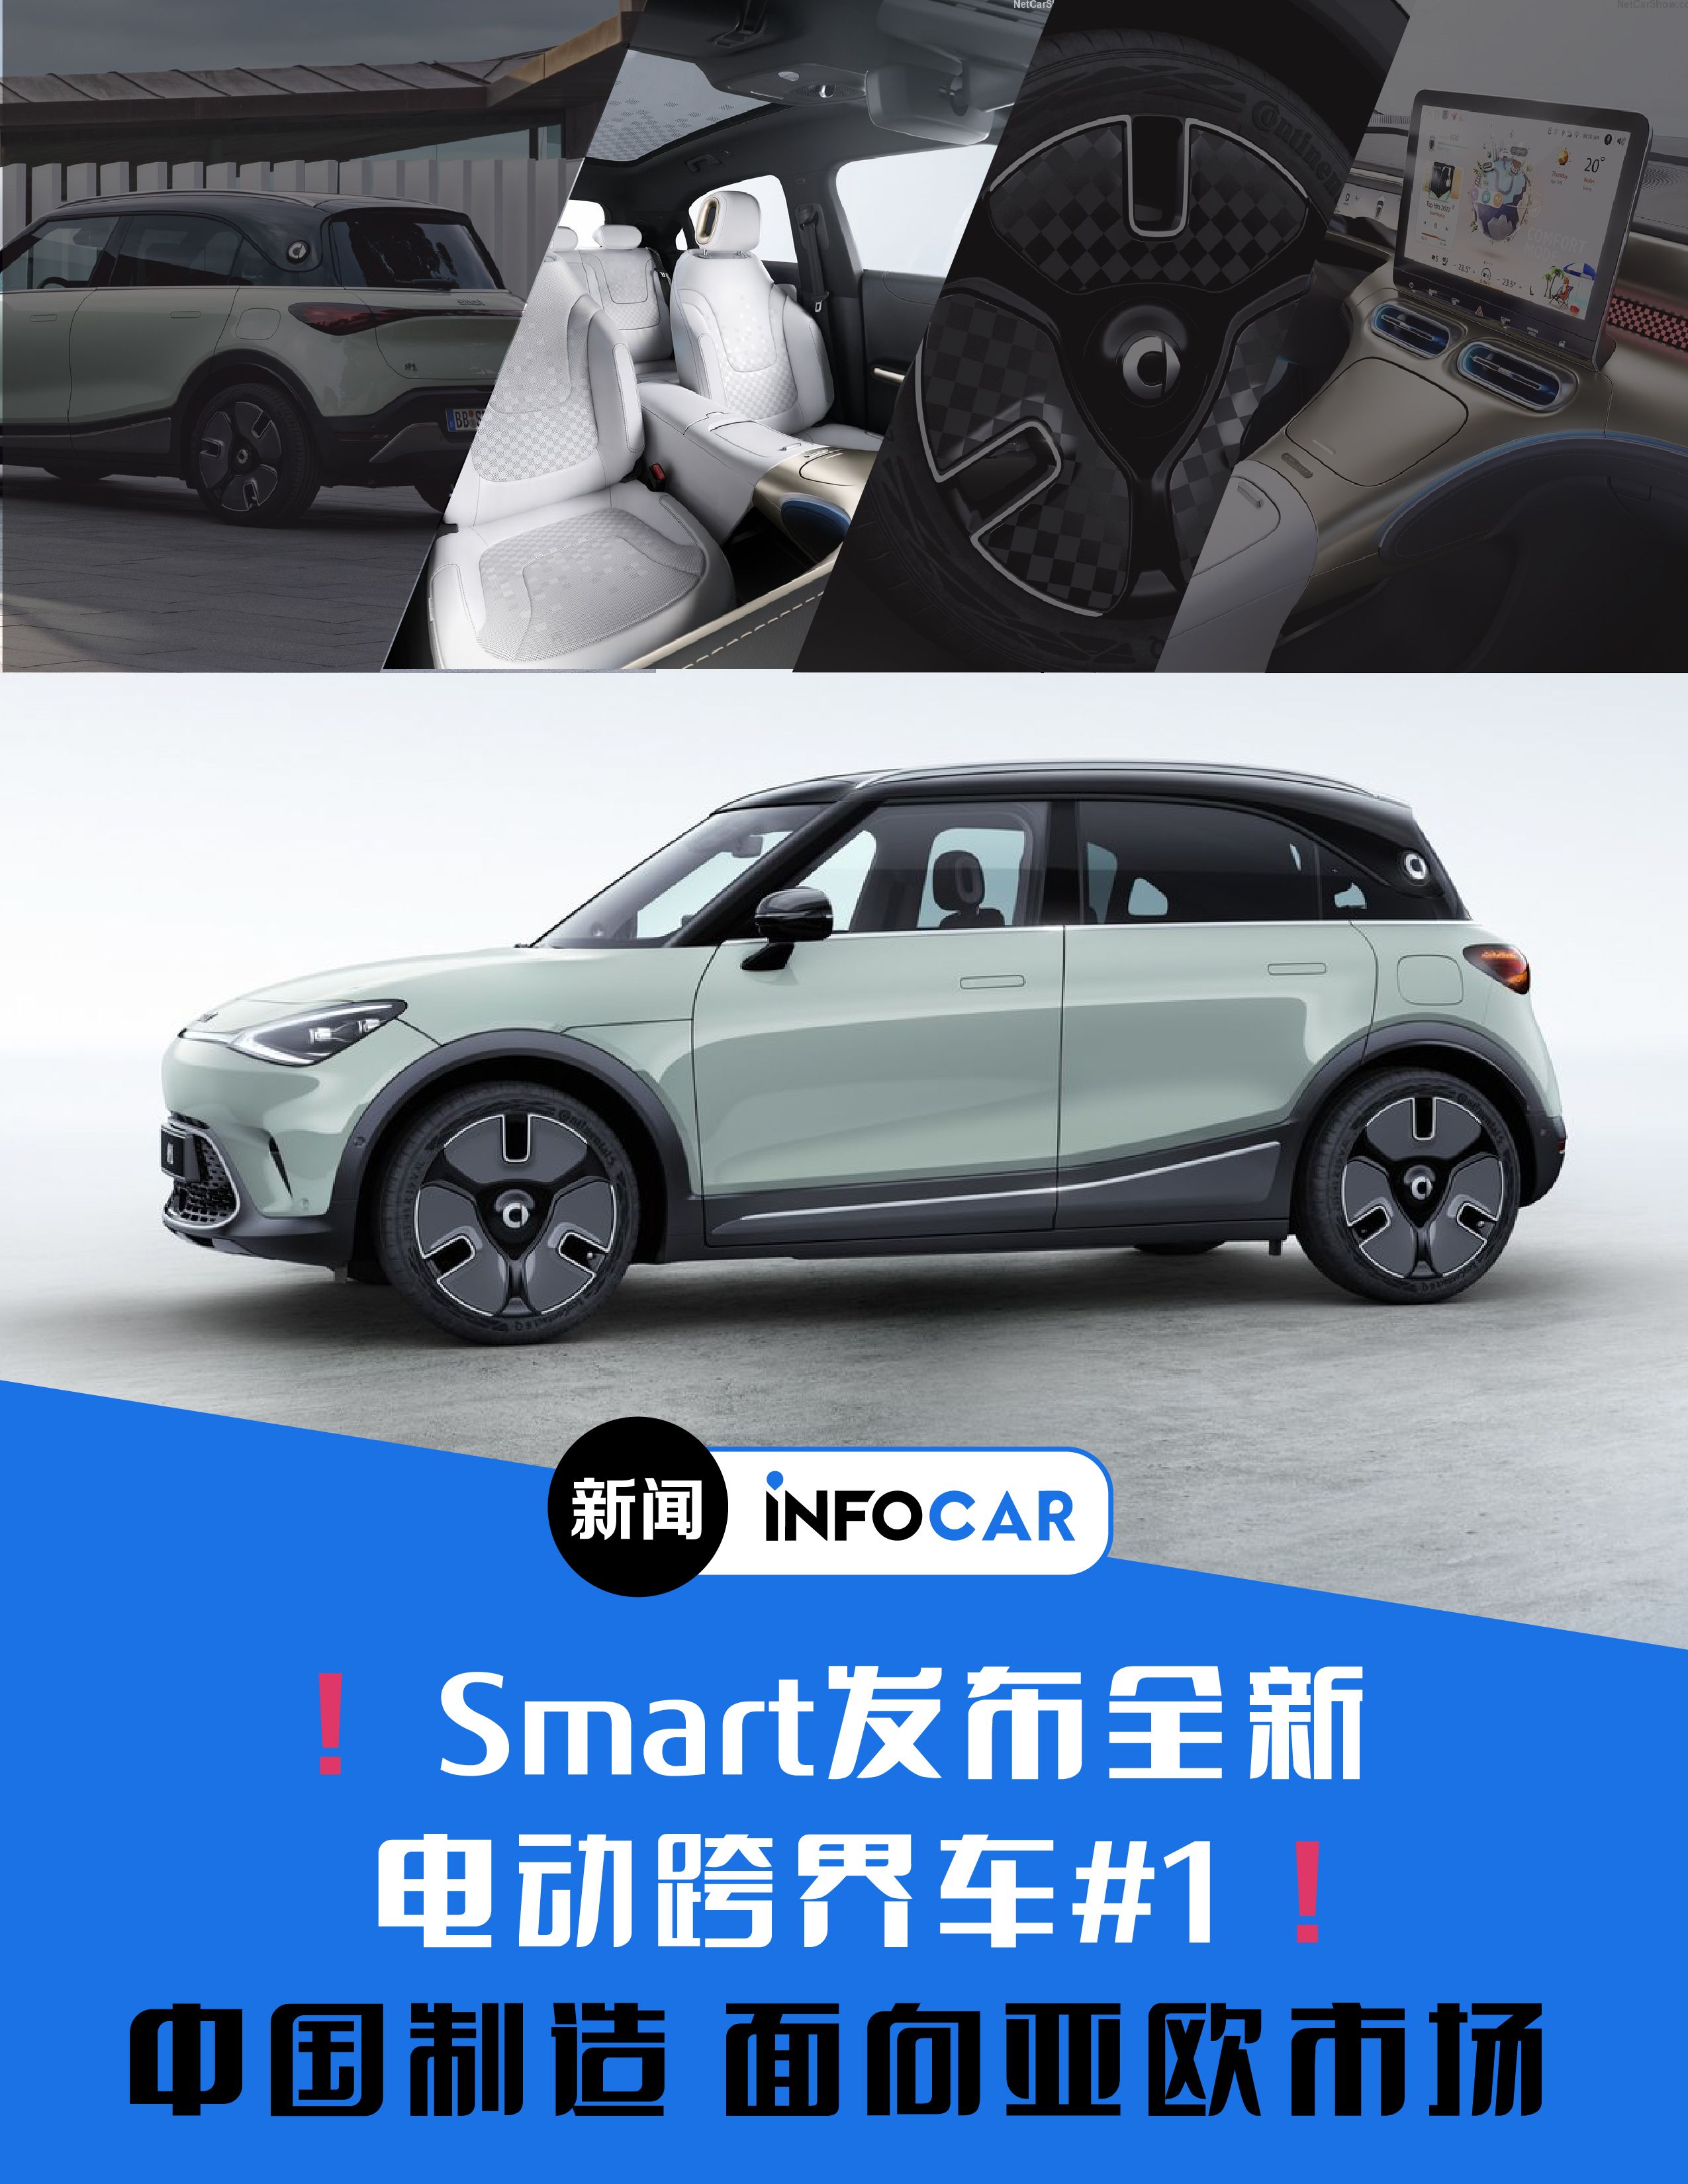 Infocar -INFOCAR车闻：Smart发布全新电动跨界车#1，对标Mini Countryman